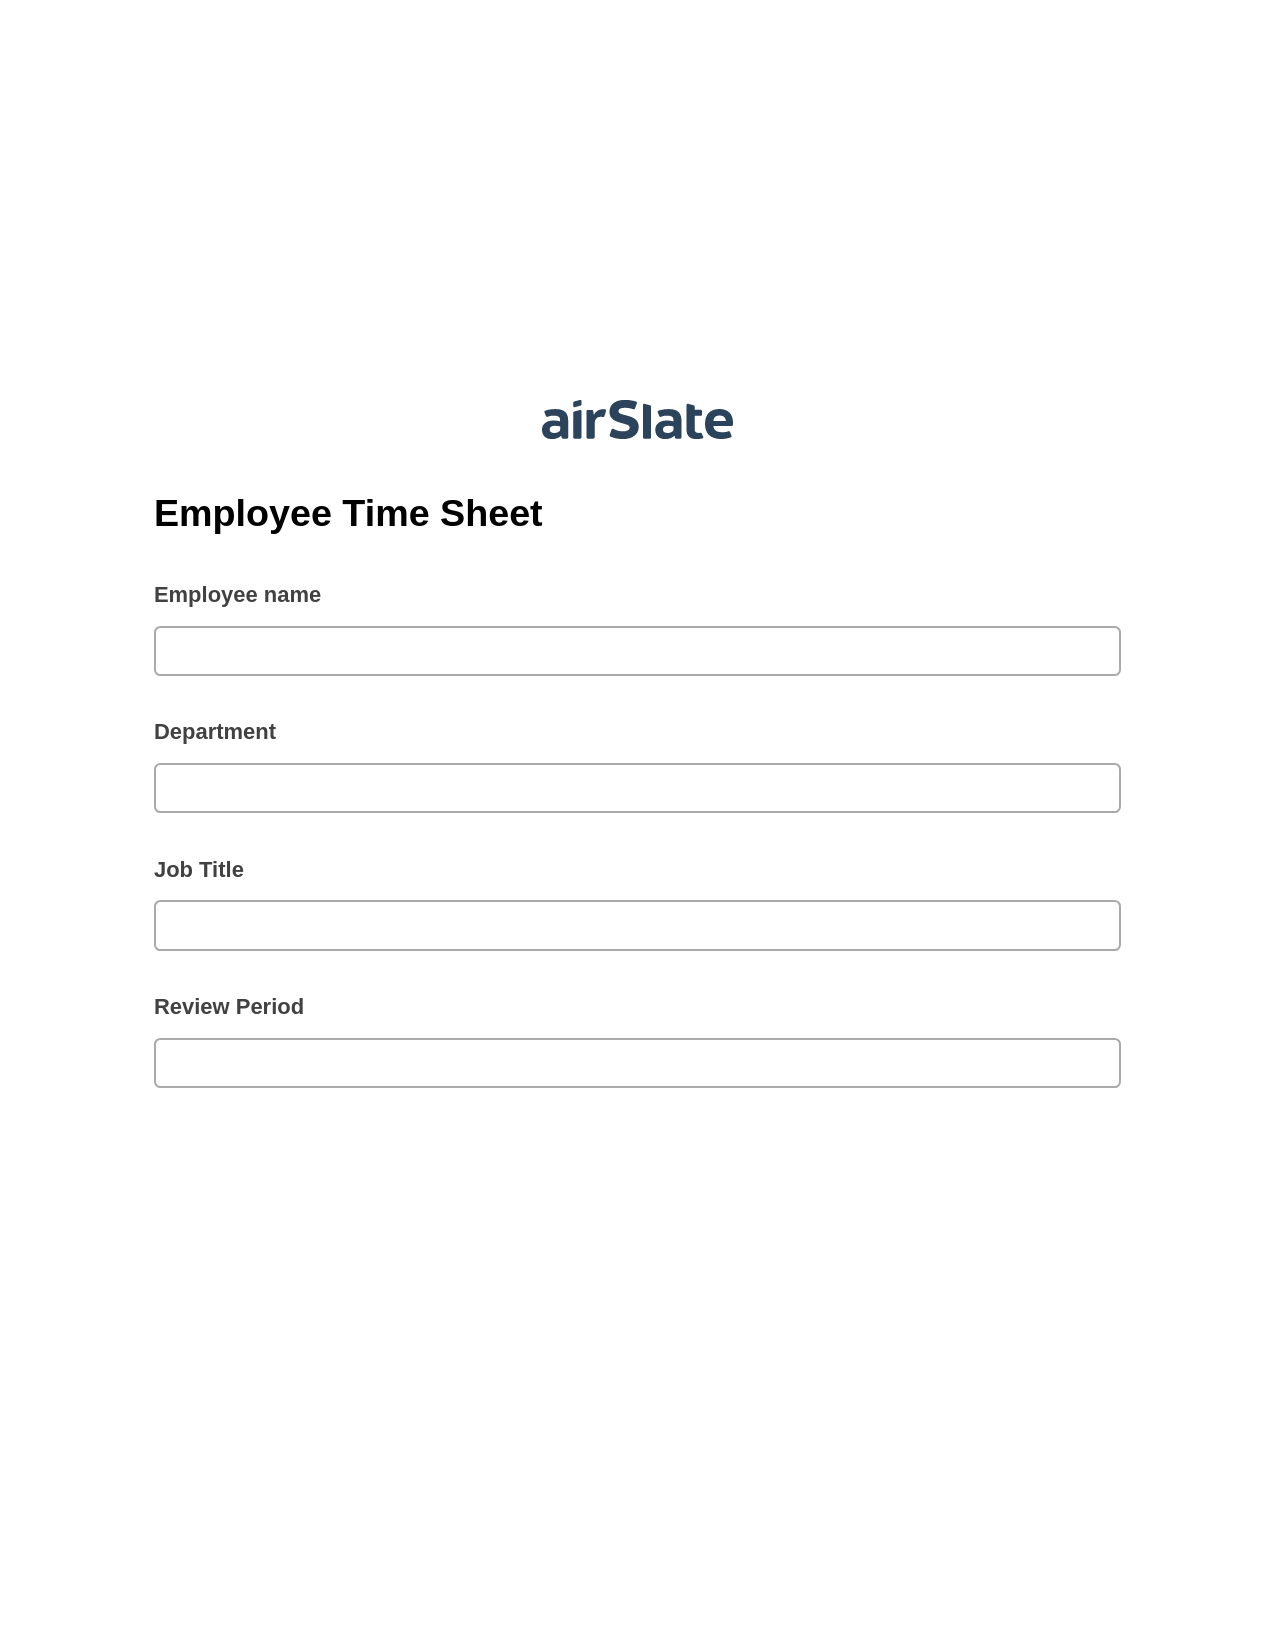 Employee Time Sheet Pre-fill Dropdowns from CSV file Bot, Create Salesforce Records Bot, Slack Notification Postfinish Bot